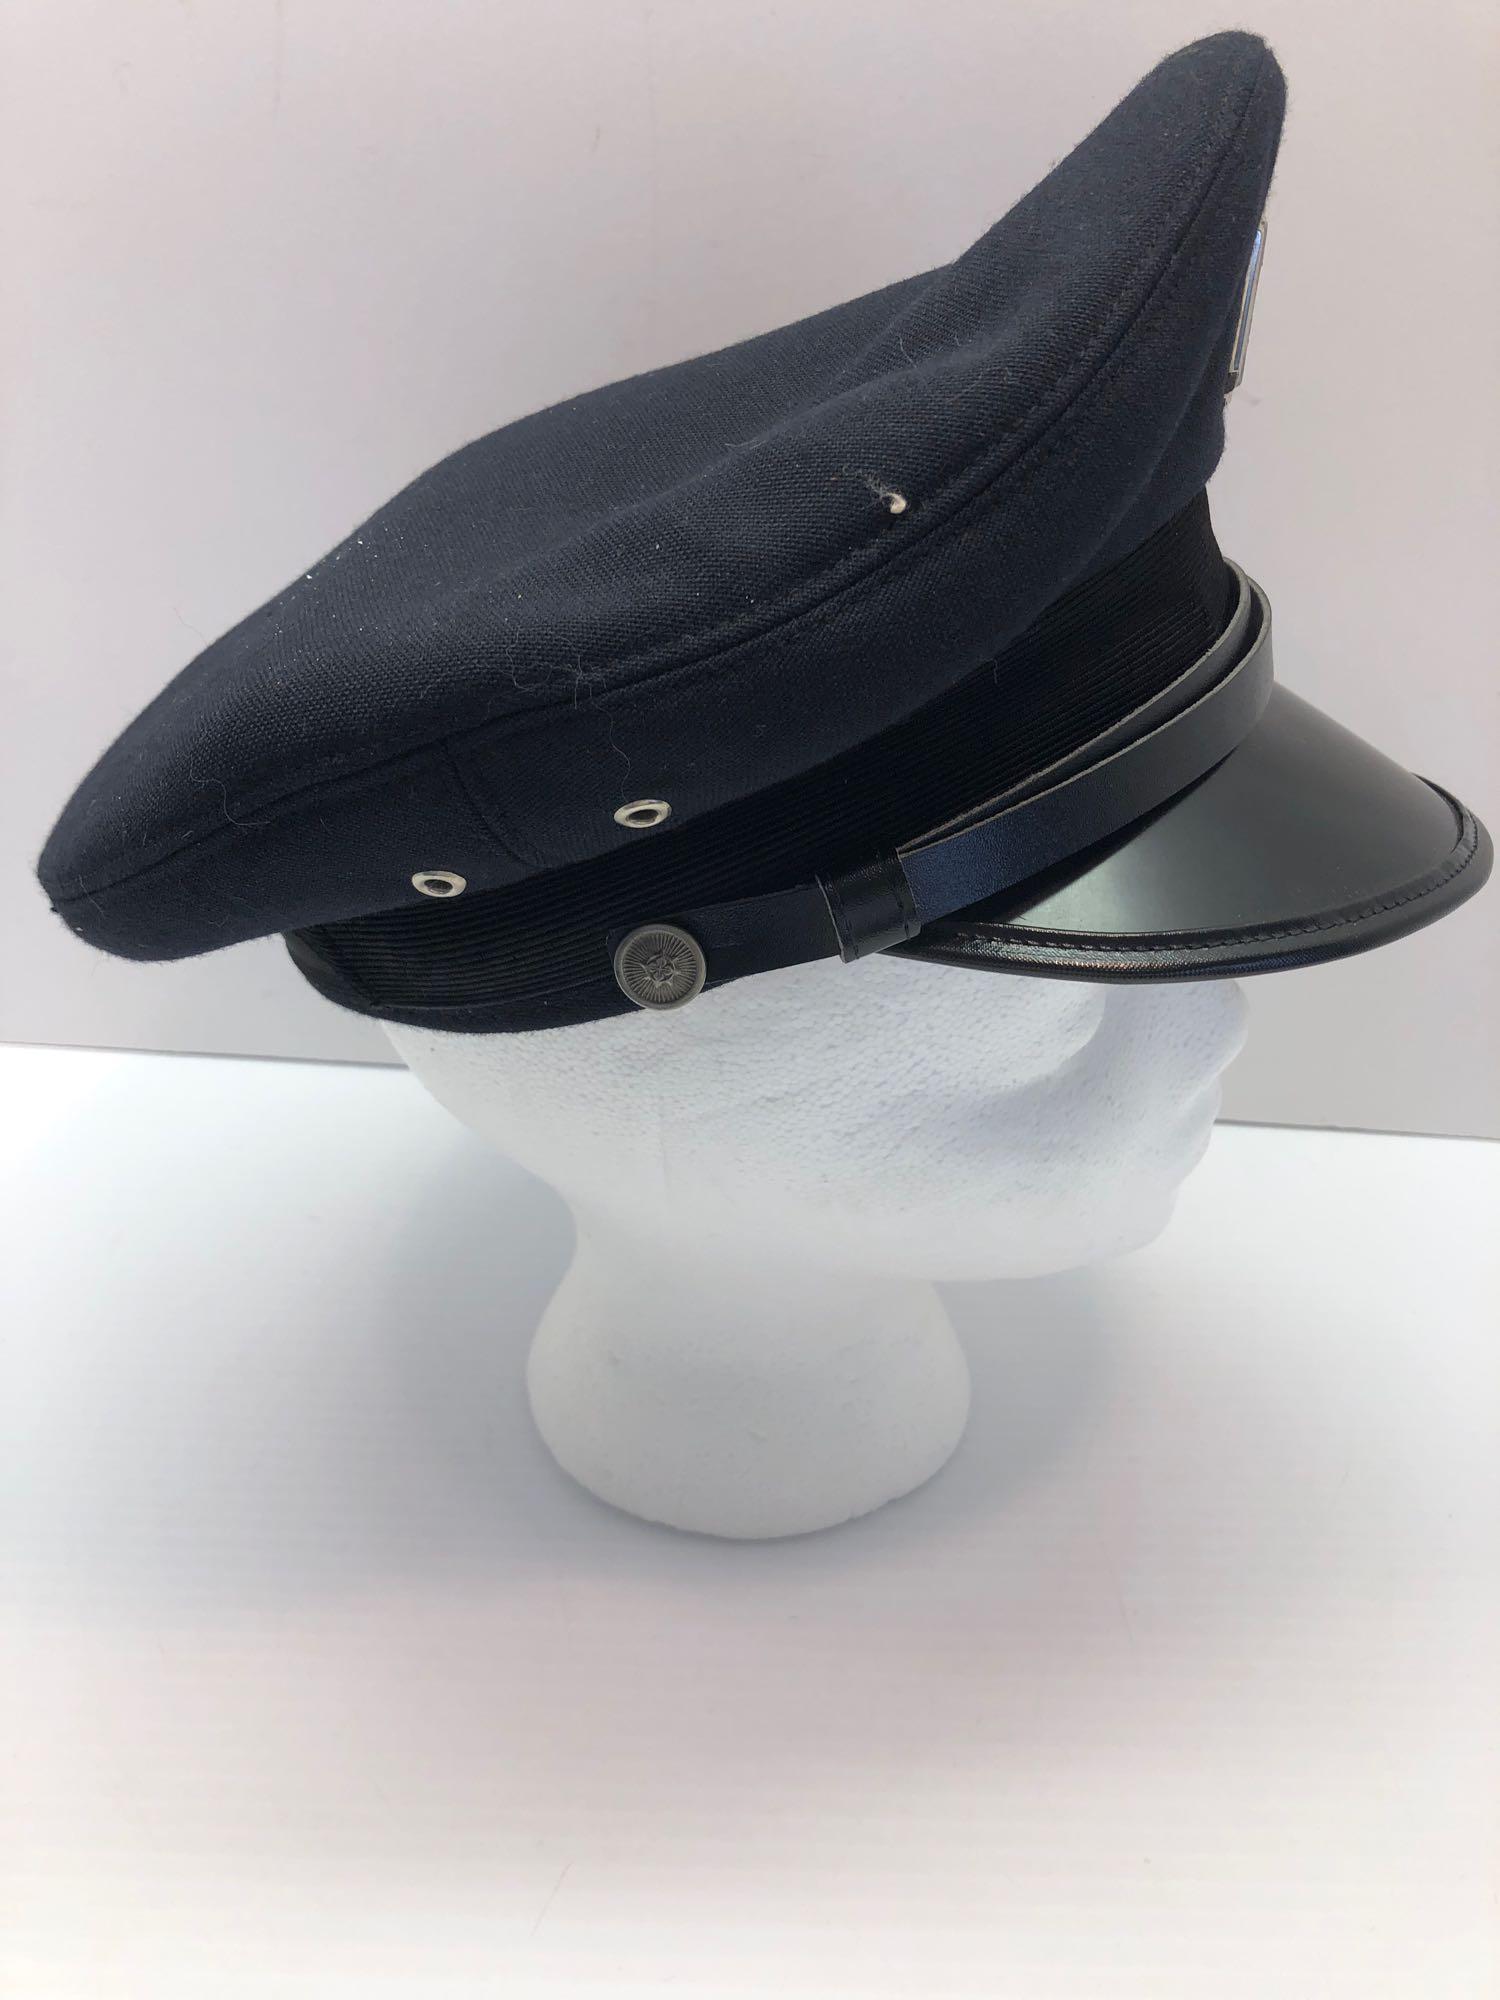 Vintage obsolete CZECH NATIONAL POLICE visor hat/metal insignia